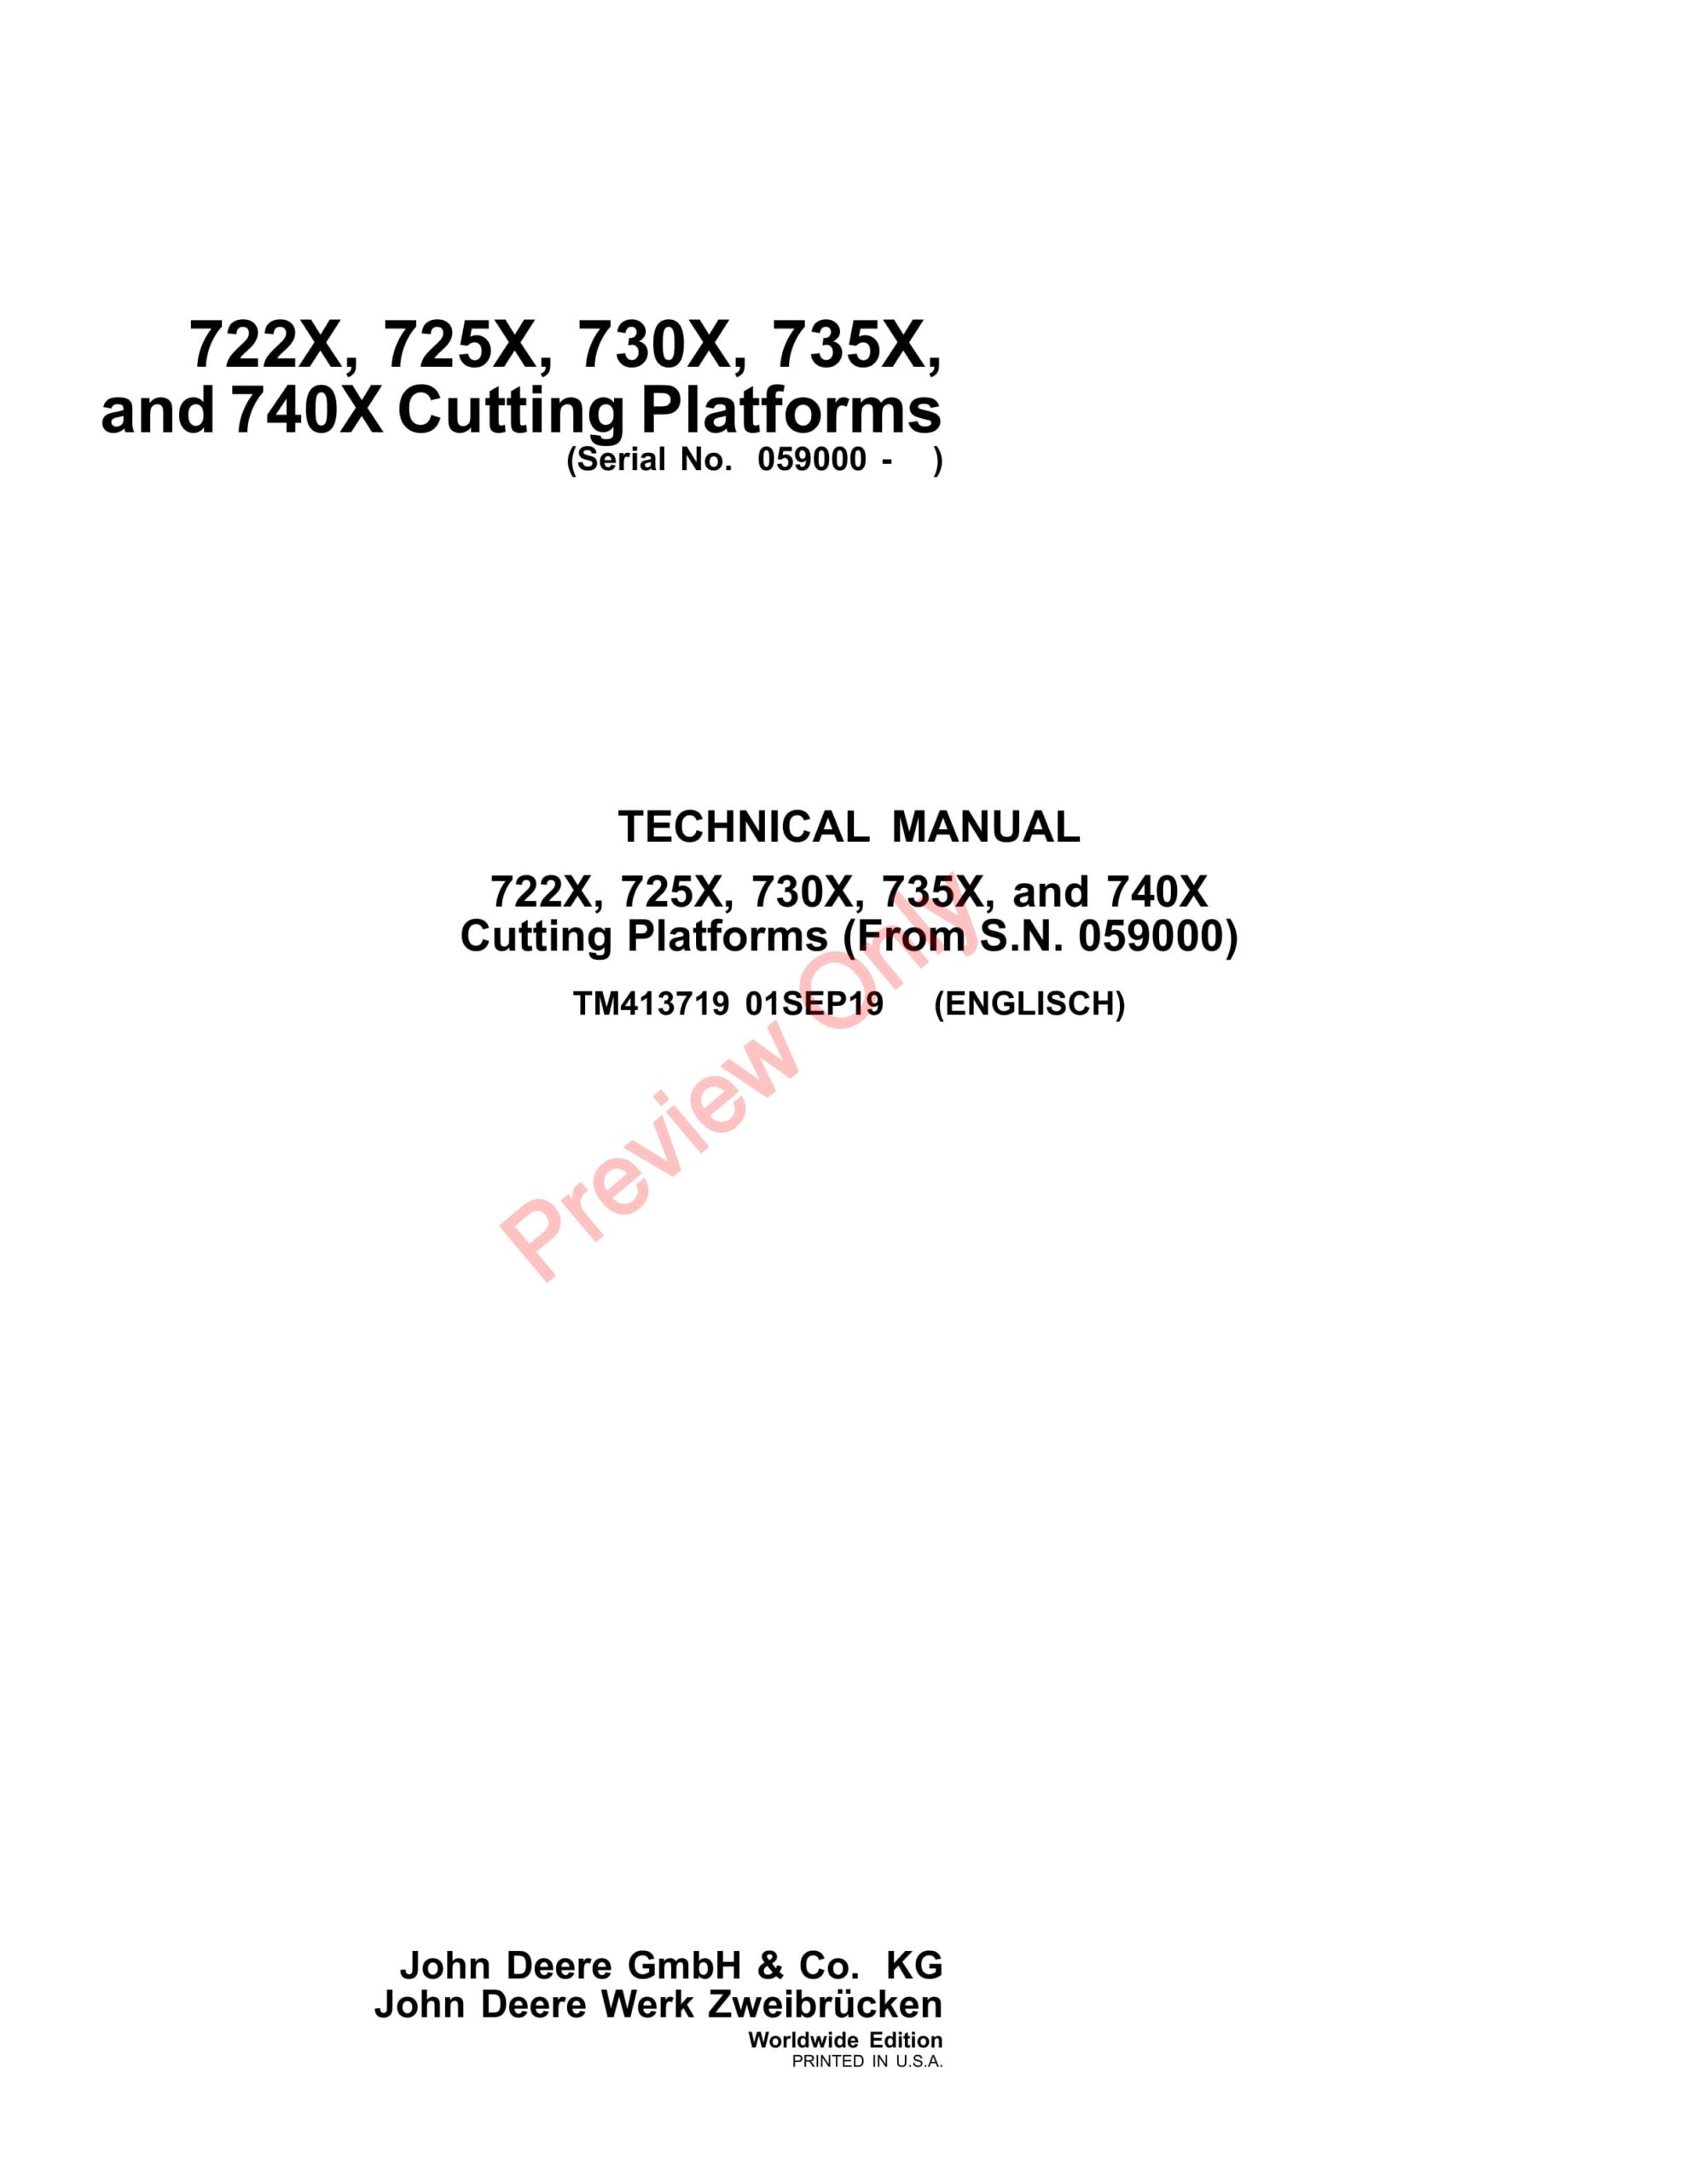 John Deere 722X, 725X, 730X, 735X and 740X Cutting Platforms Technical Manual TM413719 01SEP19-1